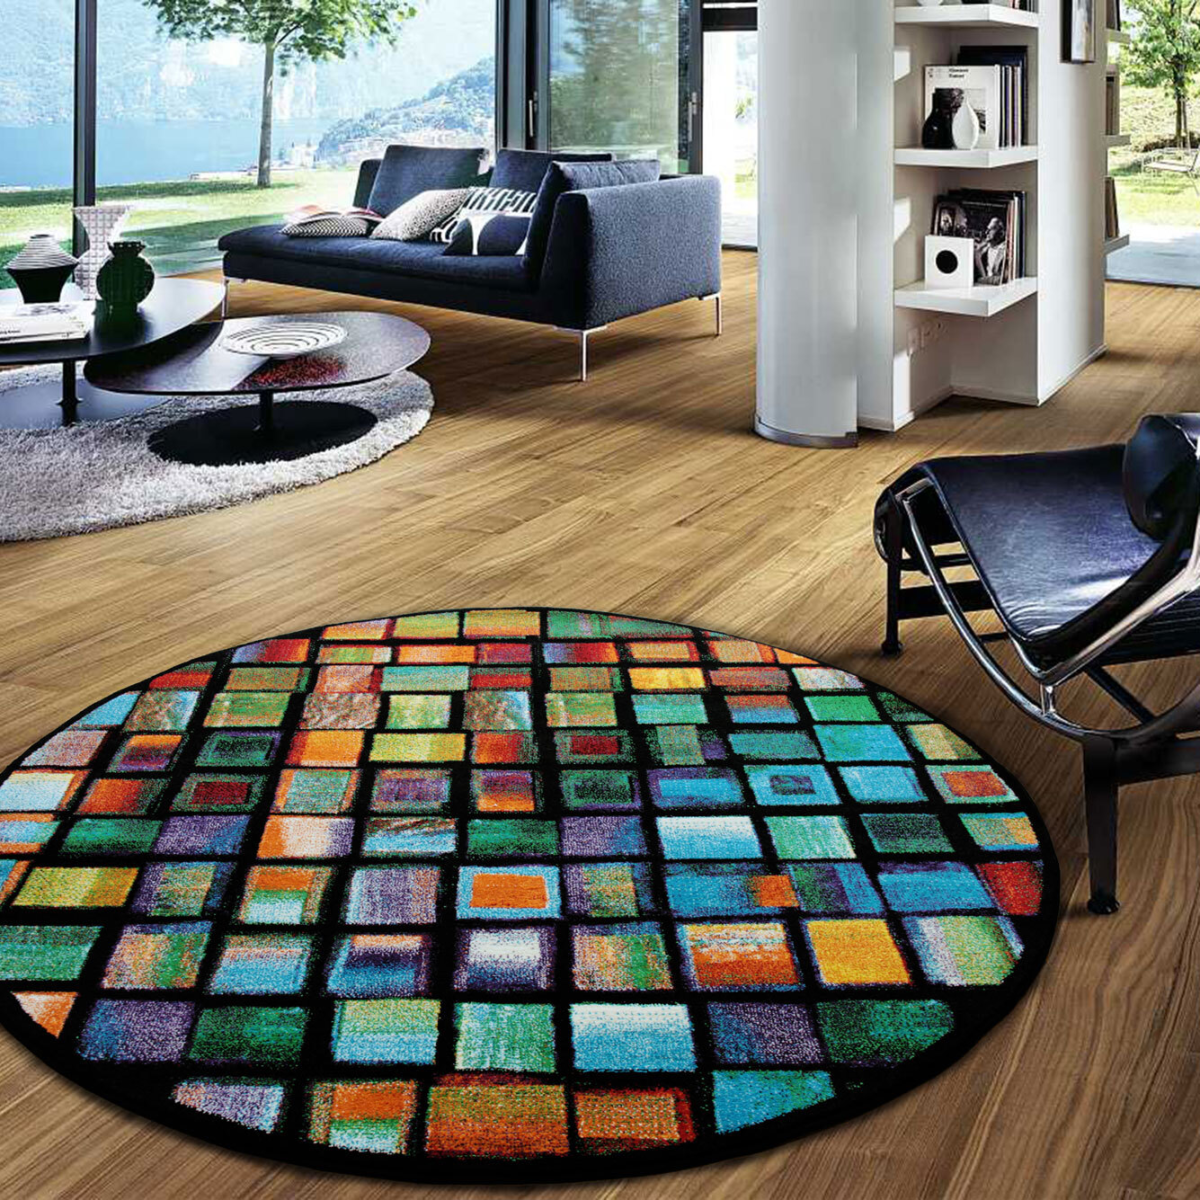 adobe square pattern rug